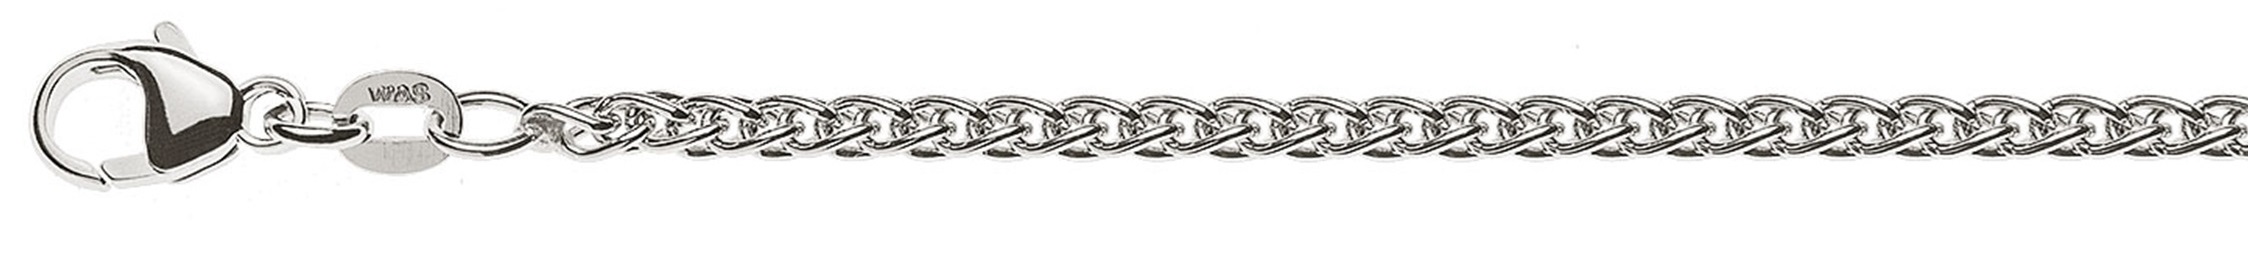 AURONOS Prestige Collier or blanc 18K chaîne câble 55cm 2.5mm